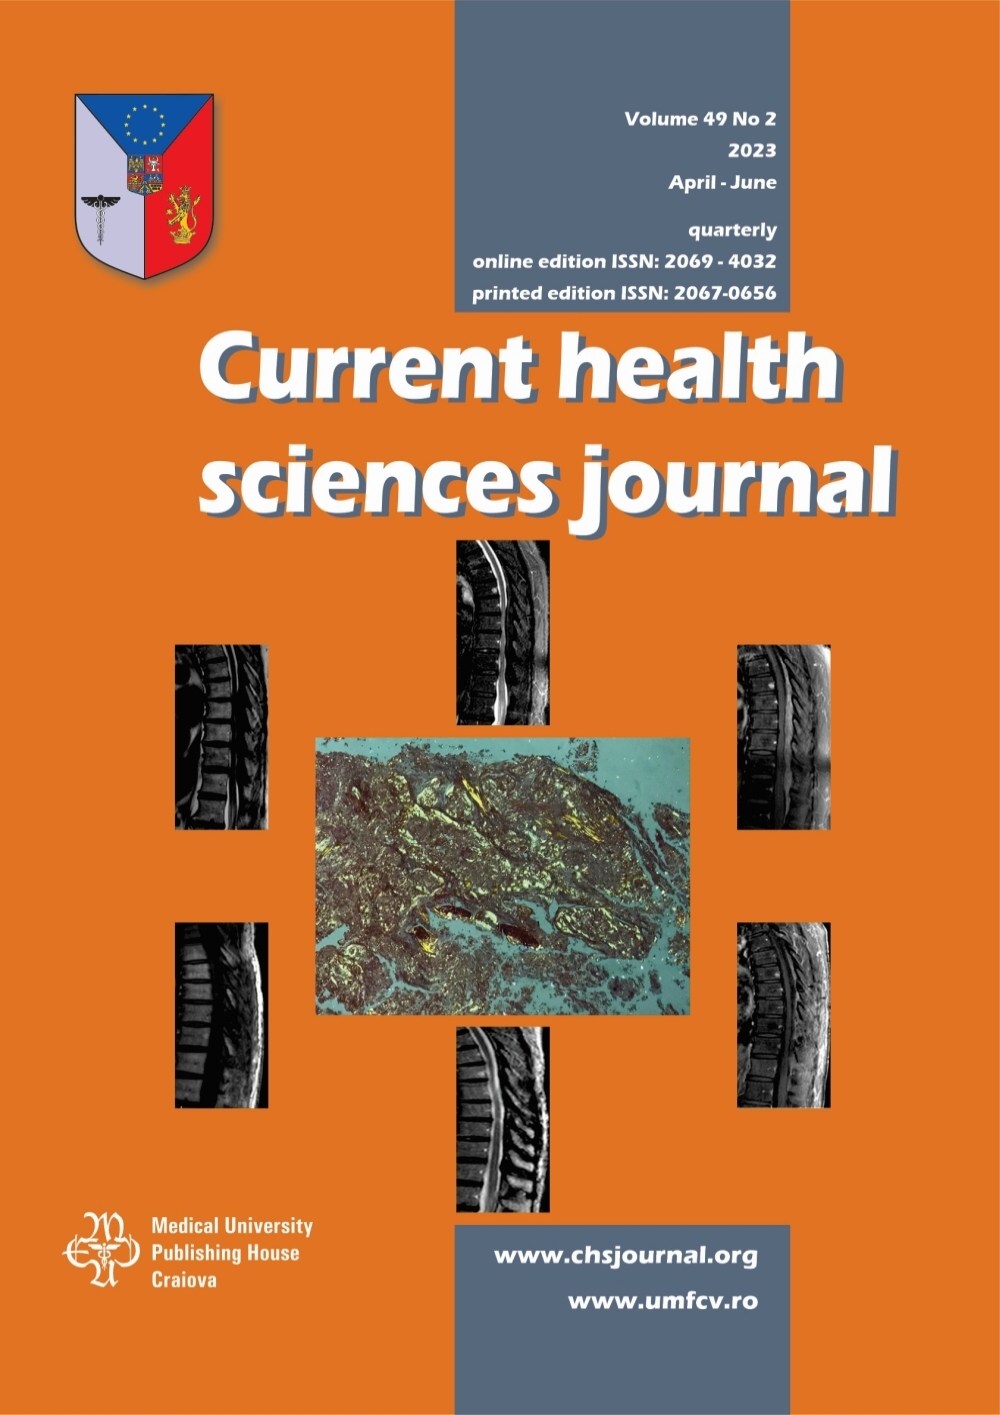 Current Health Sciences Journal, vol. 49 no. 2, 2023